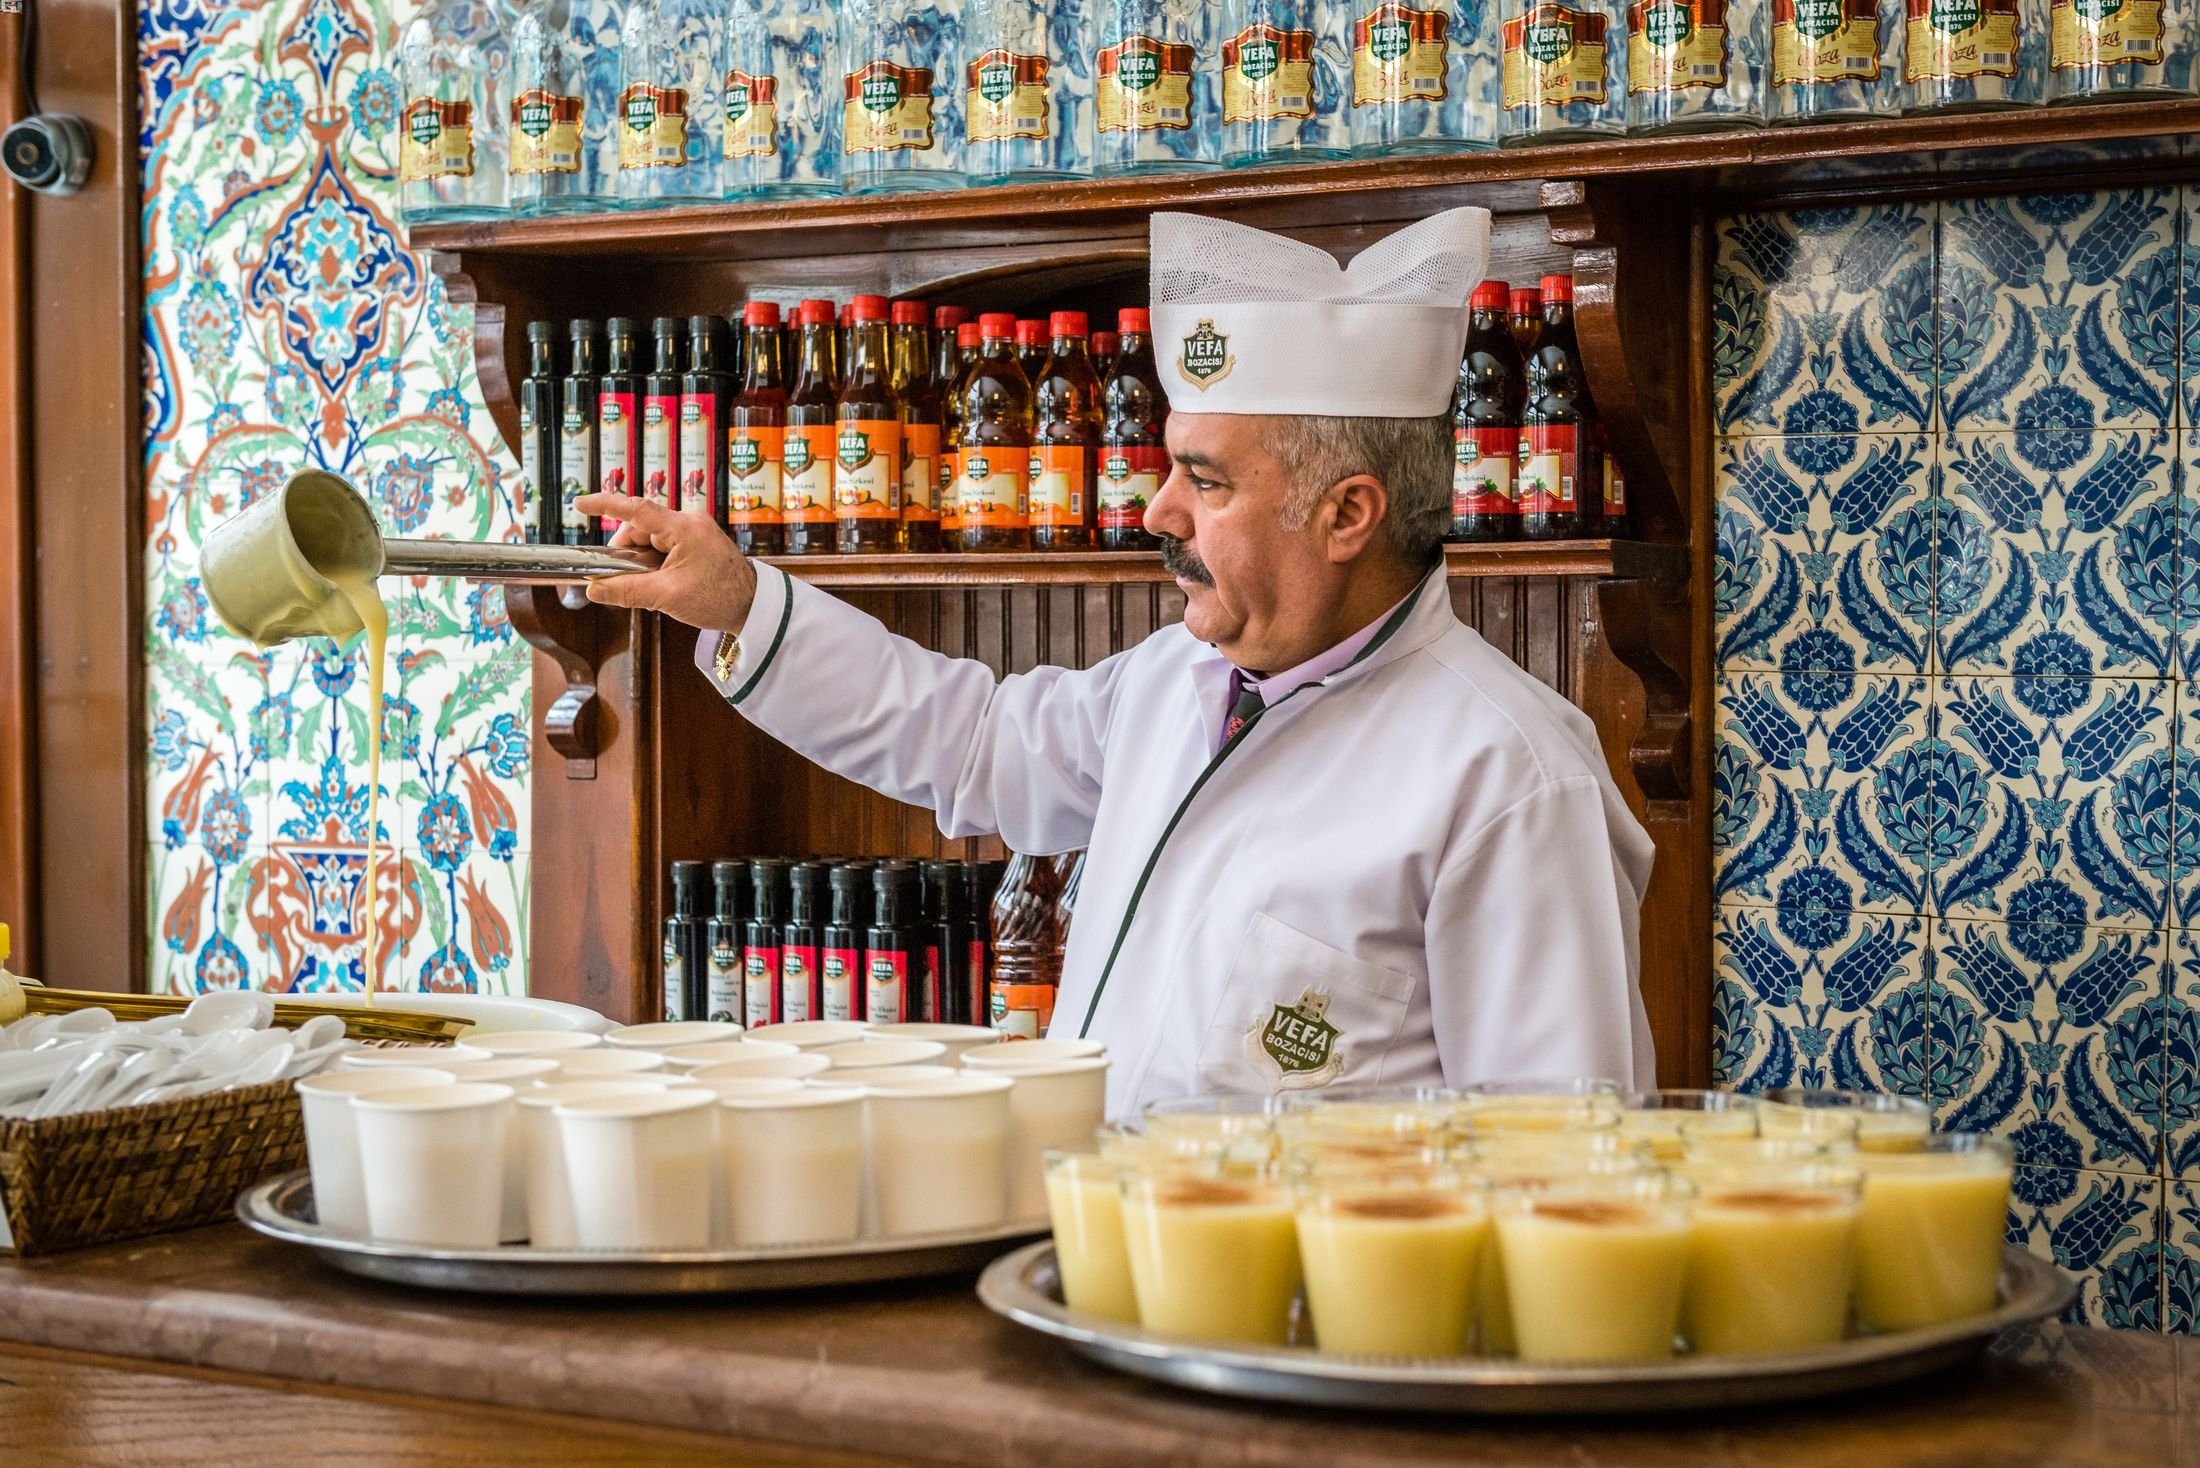 Boza is a popular fermented beverage famously sold in Istanbul, Türkiye. (Shutterstock Photo)